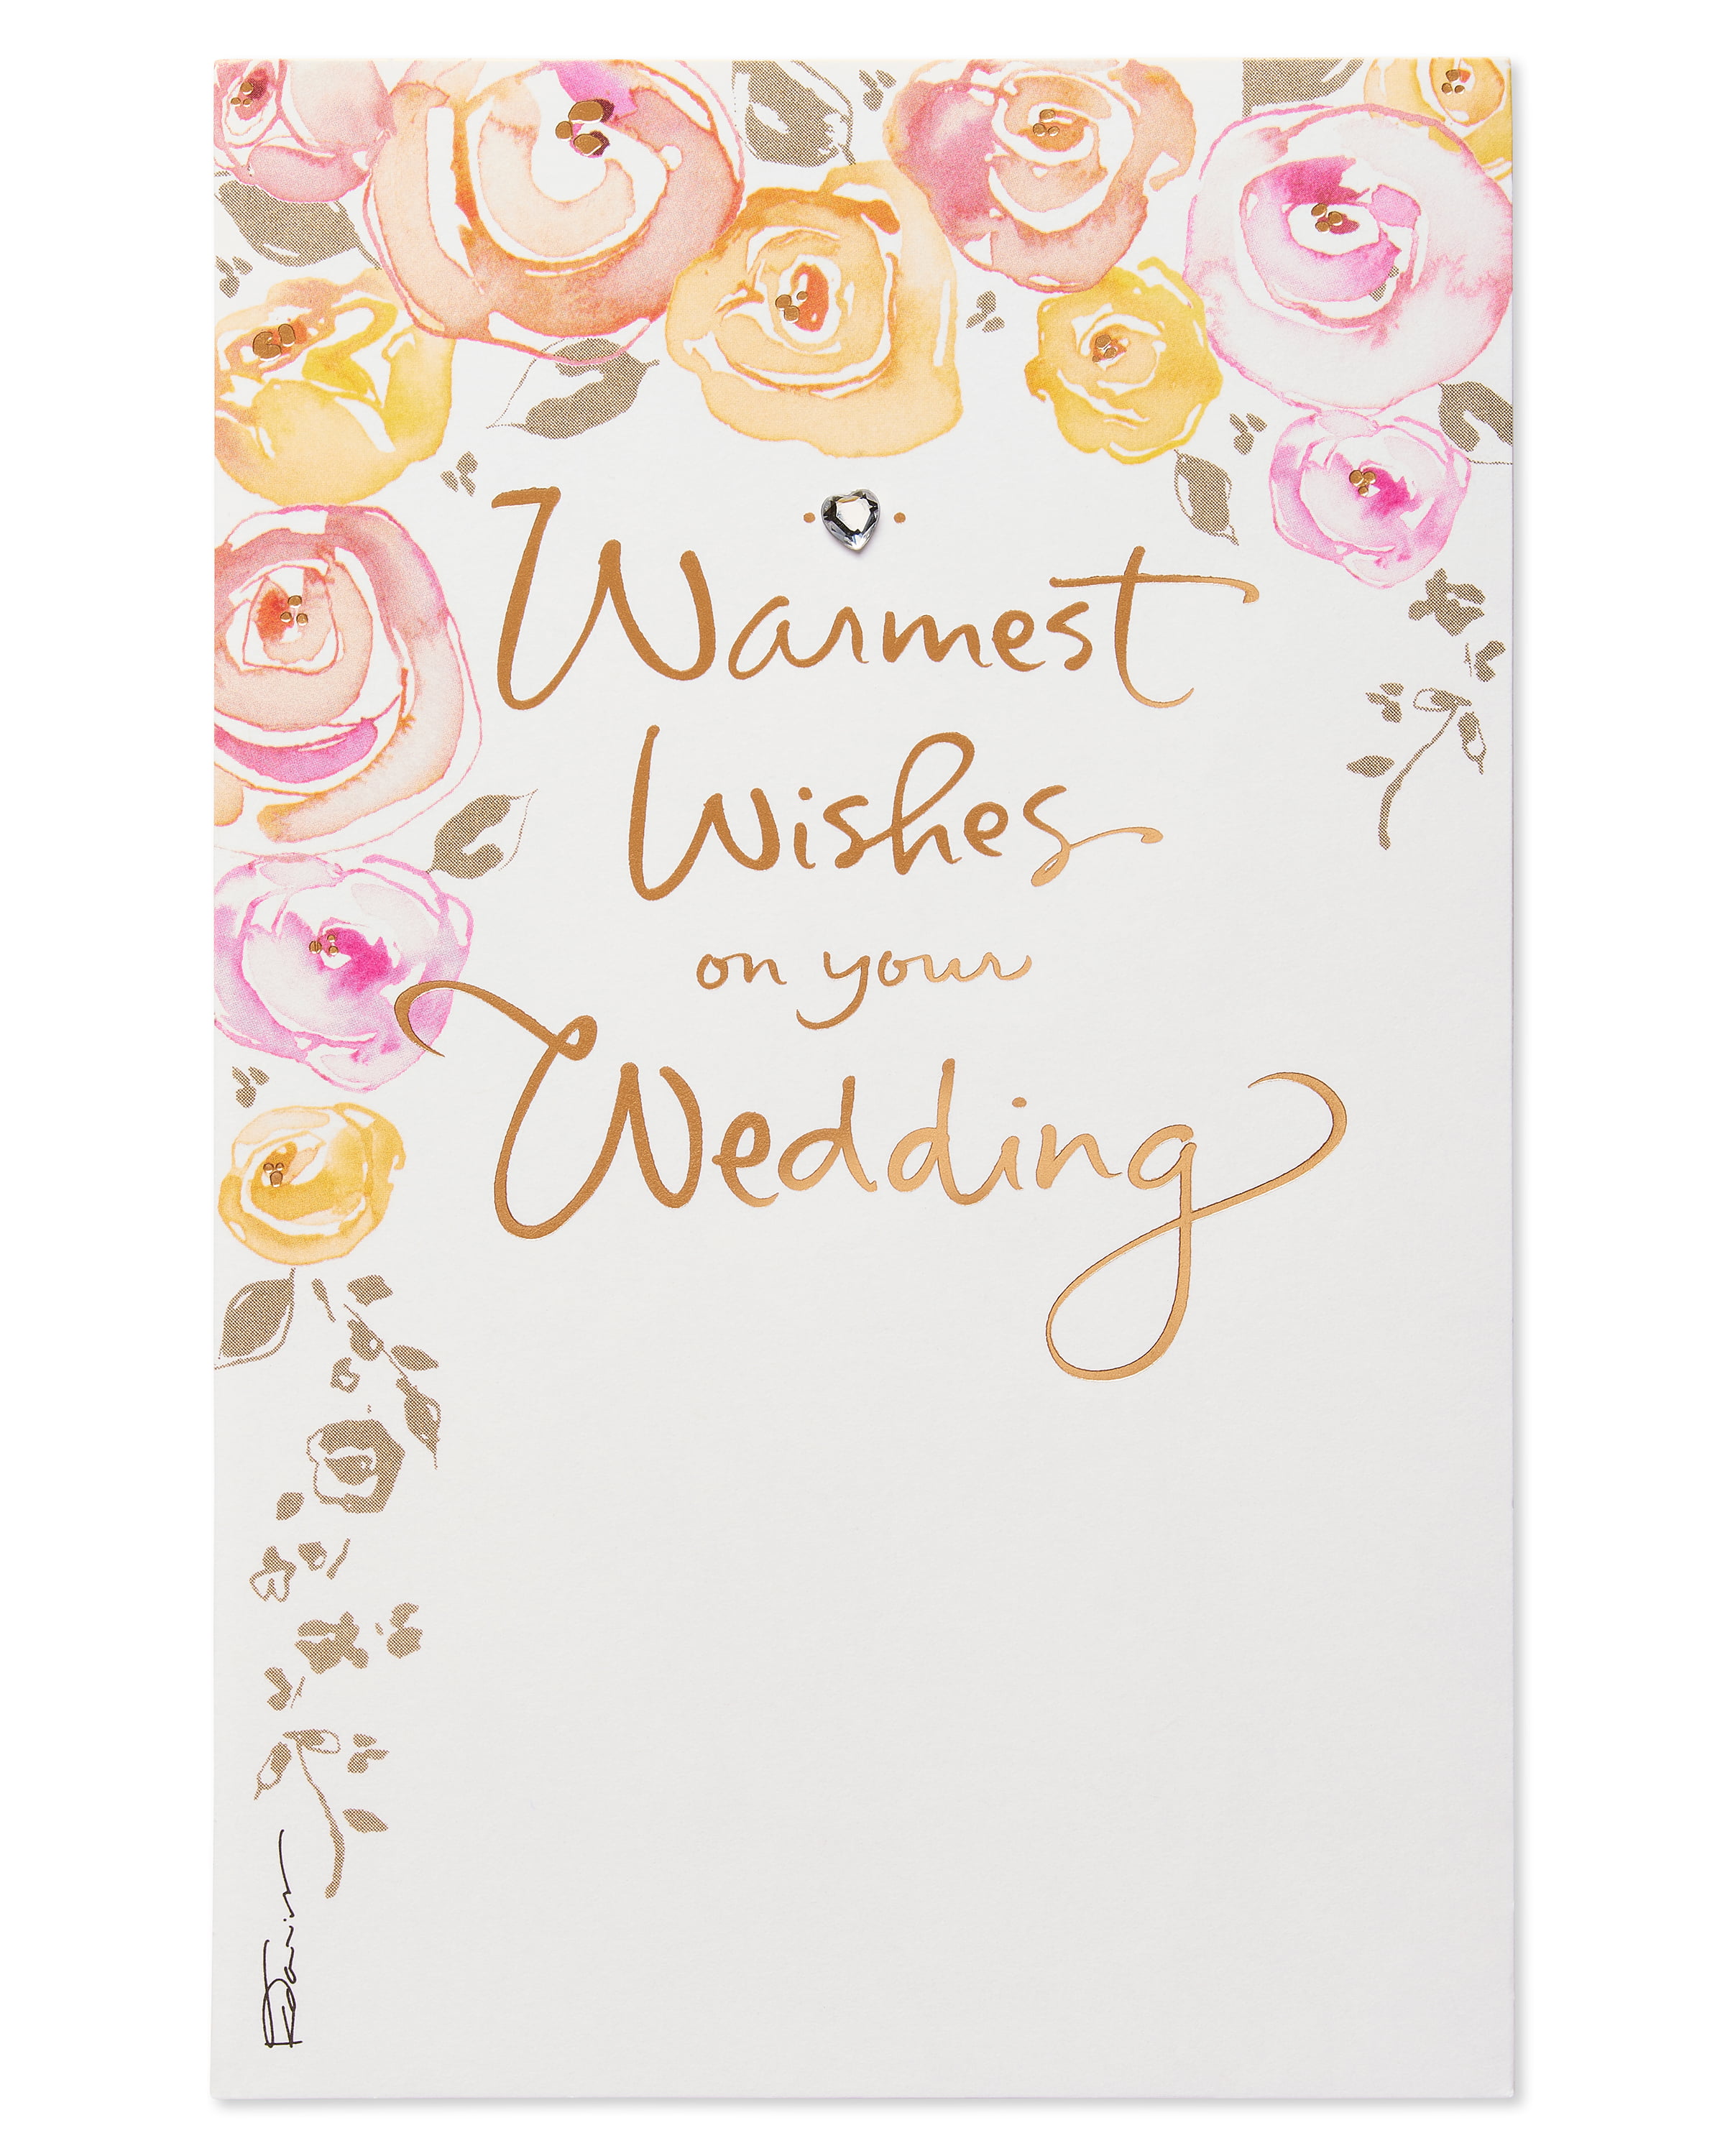 american-greetings-warmest-wishes-wedding-card-with-rhinestones